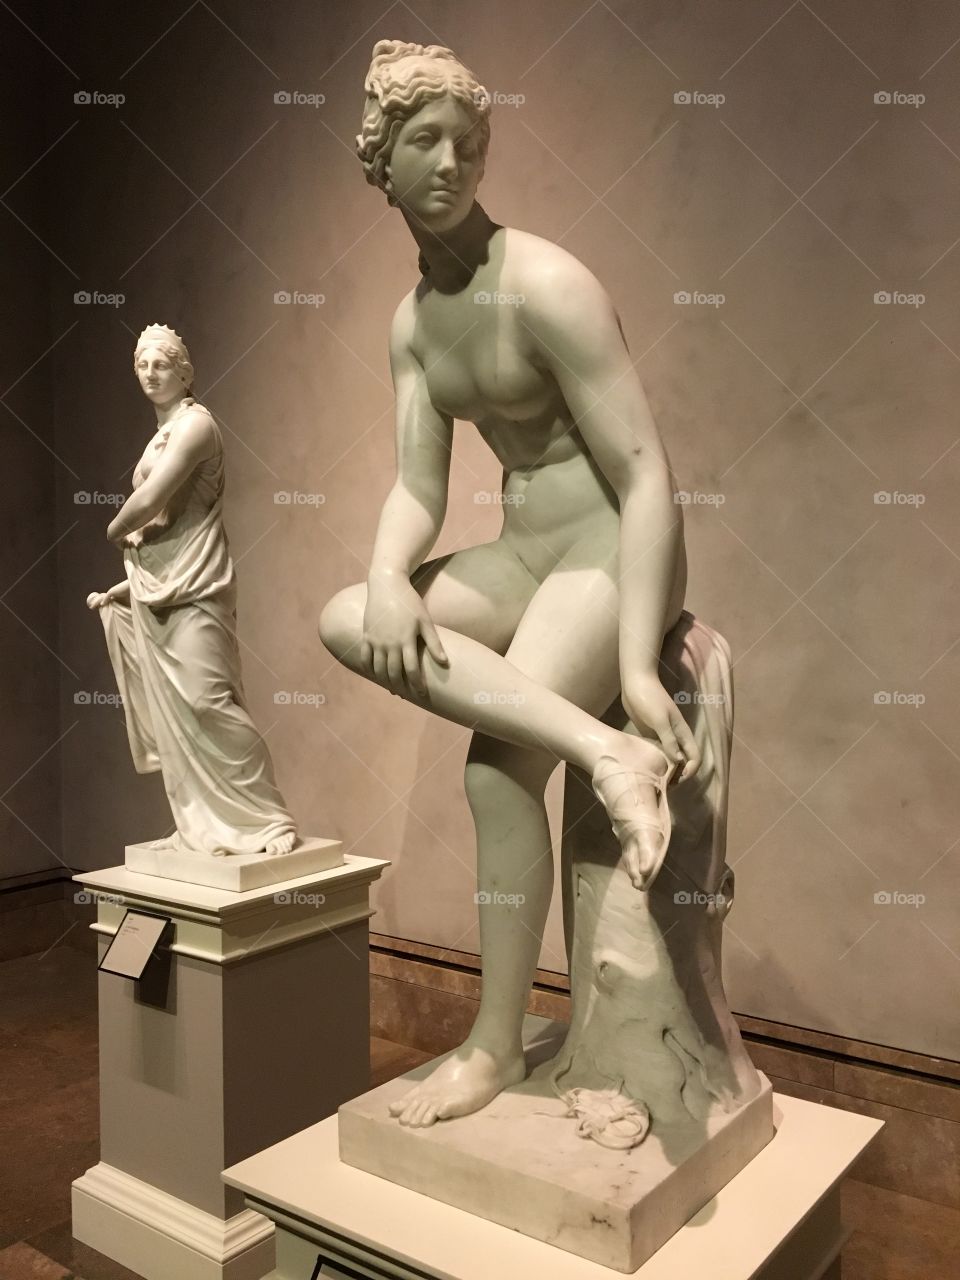 Venus Sculpture at The Getty